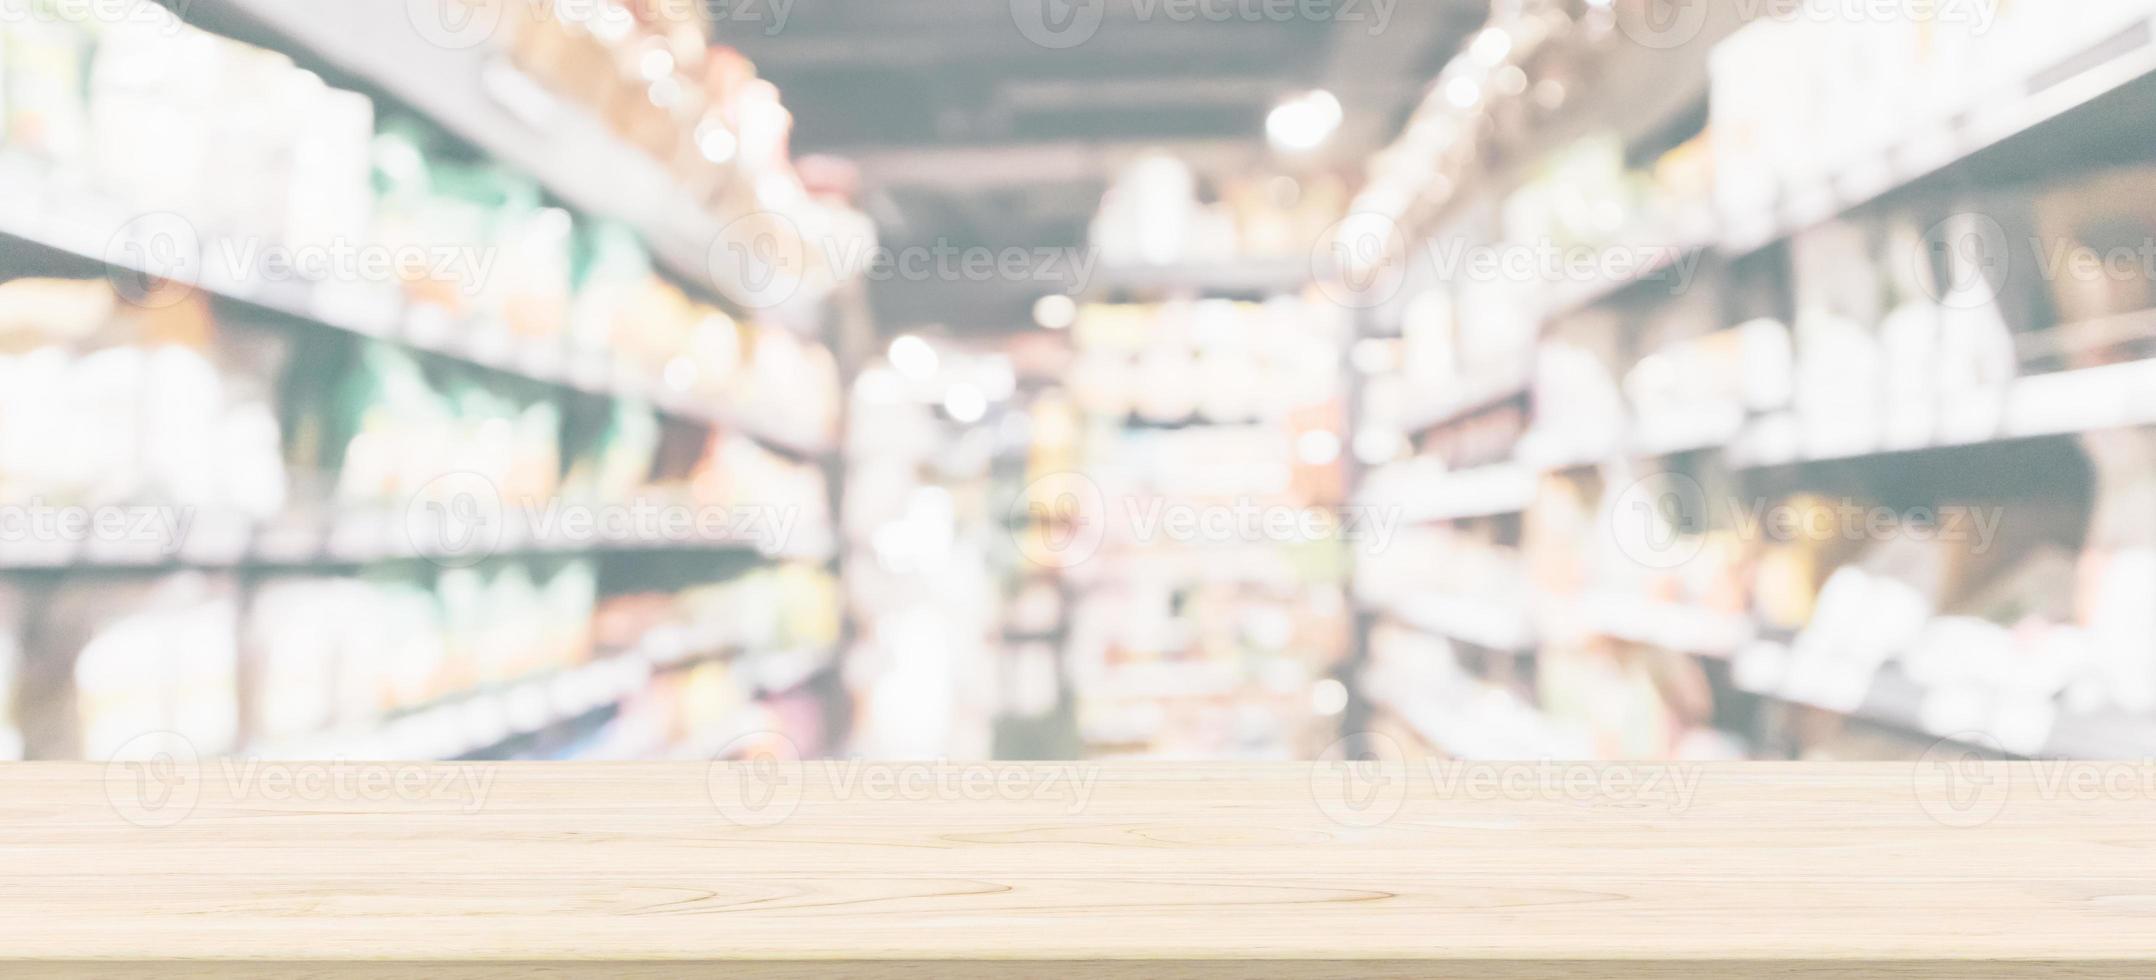 mesa de madera con supermercado abstracto supermercado refrigerador fondo desenfocado borroso con luz bokeh foto